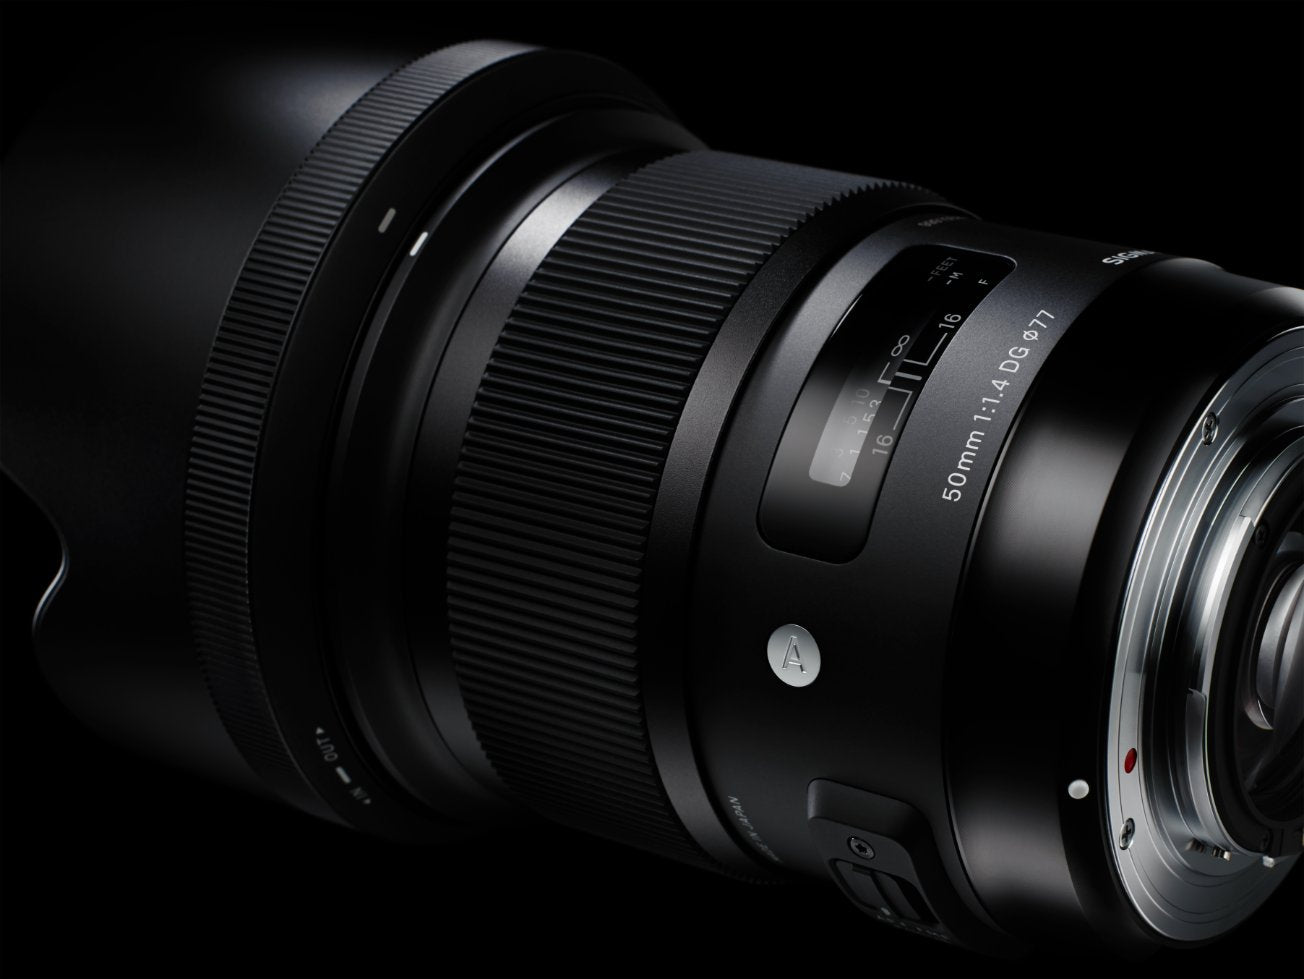 Sigma 50mm F1.4 DG HSM Art lens - Canon EF